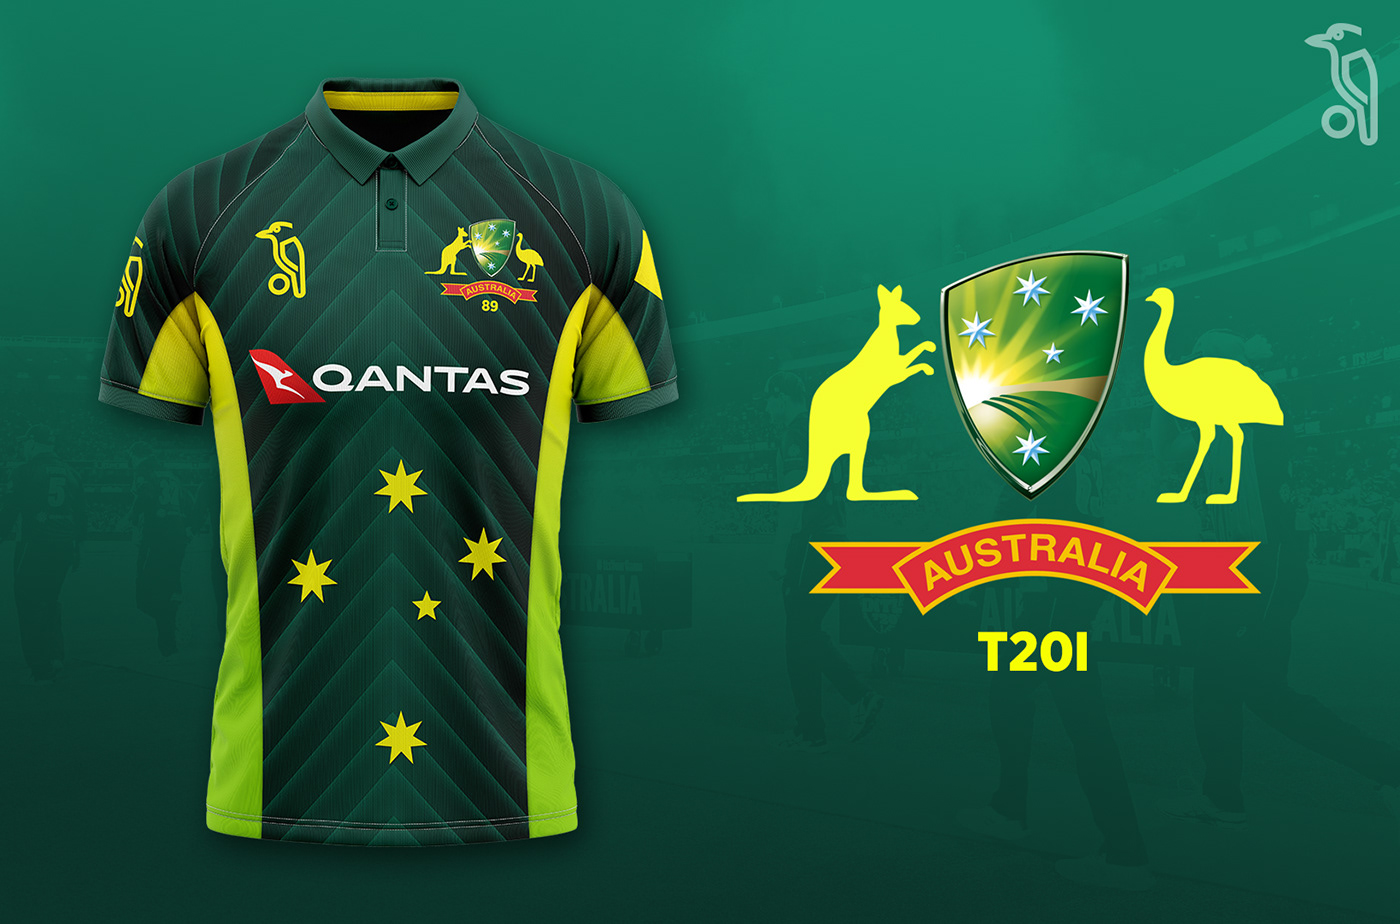 Cricket Australia Jerseys apparel sports Sports Design Cricket Jerseys Big Bash bbl shield